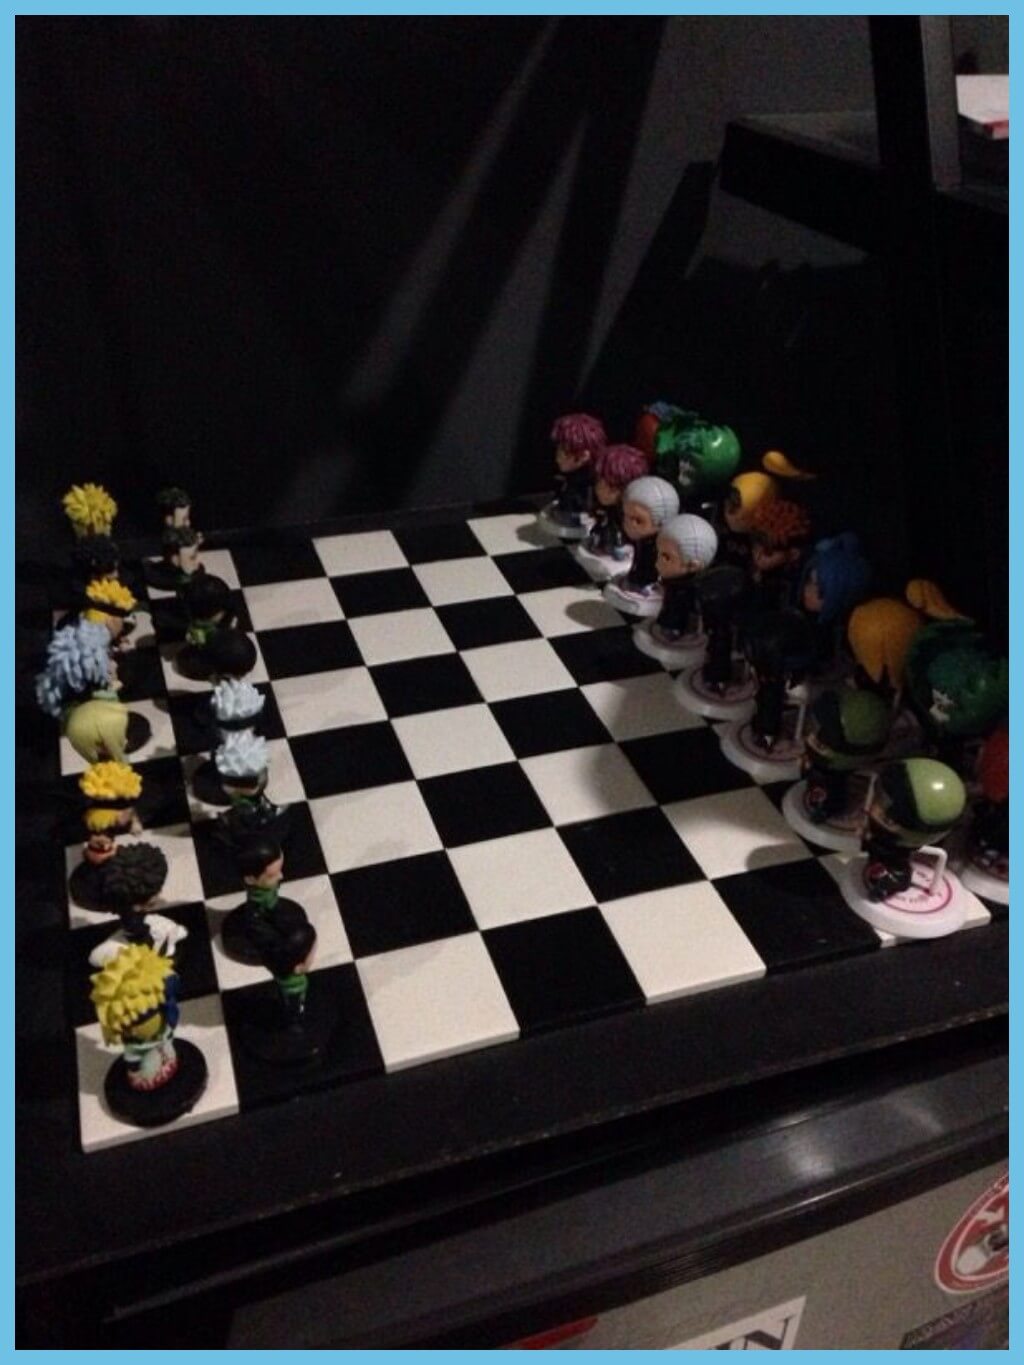 naruto chess set dark figures